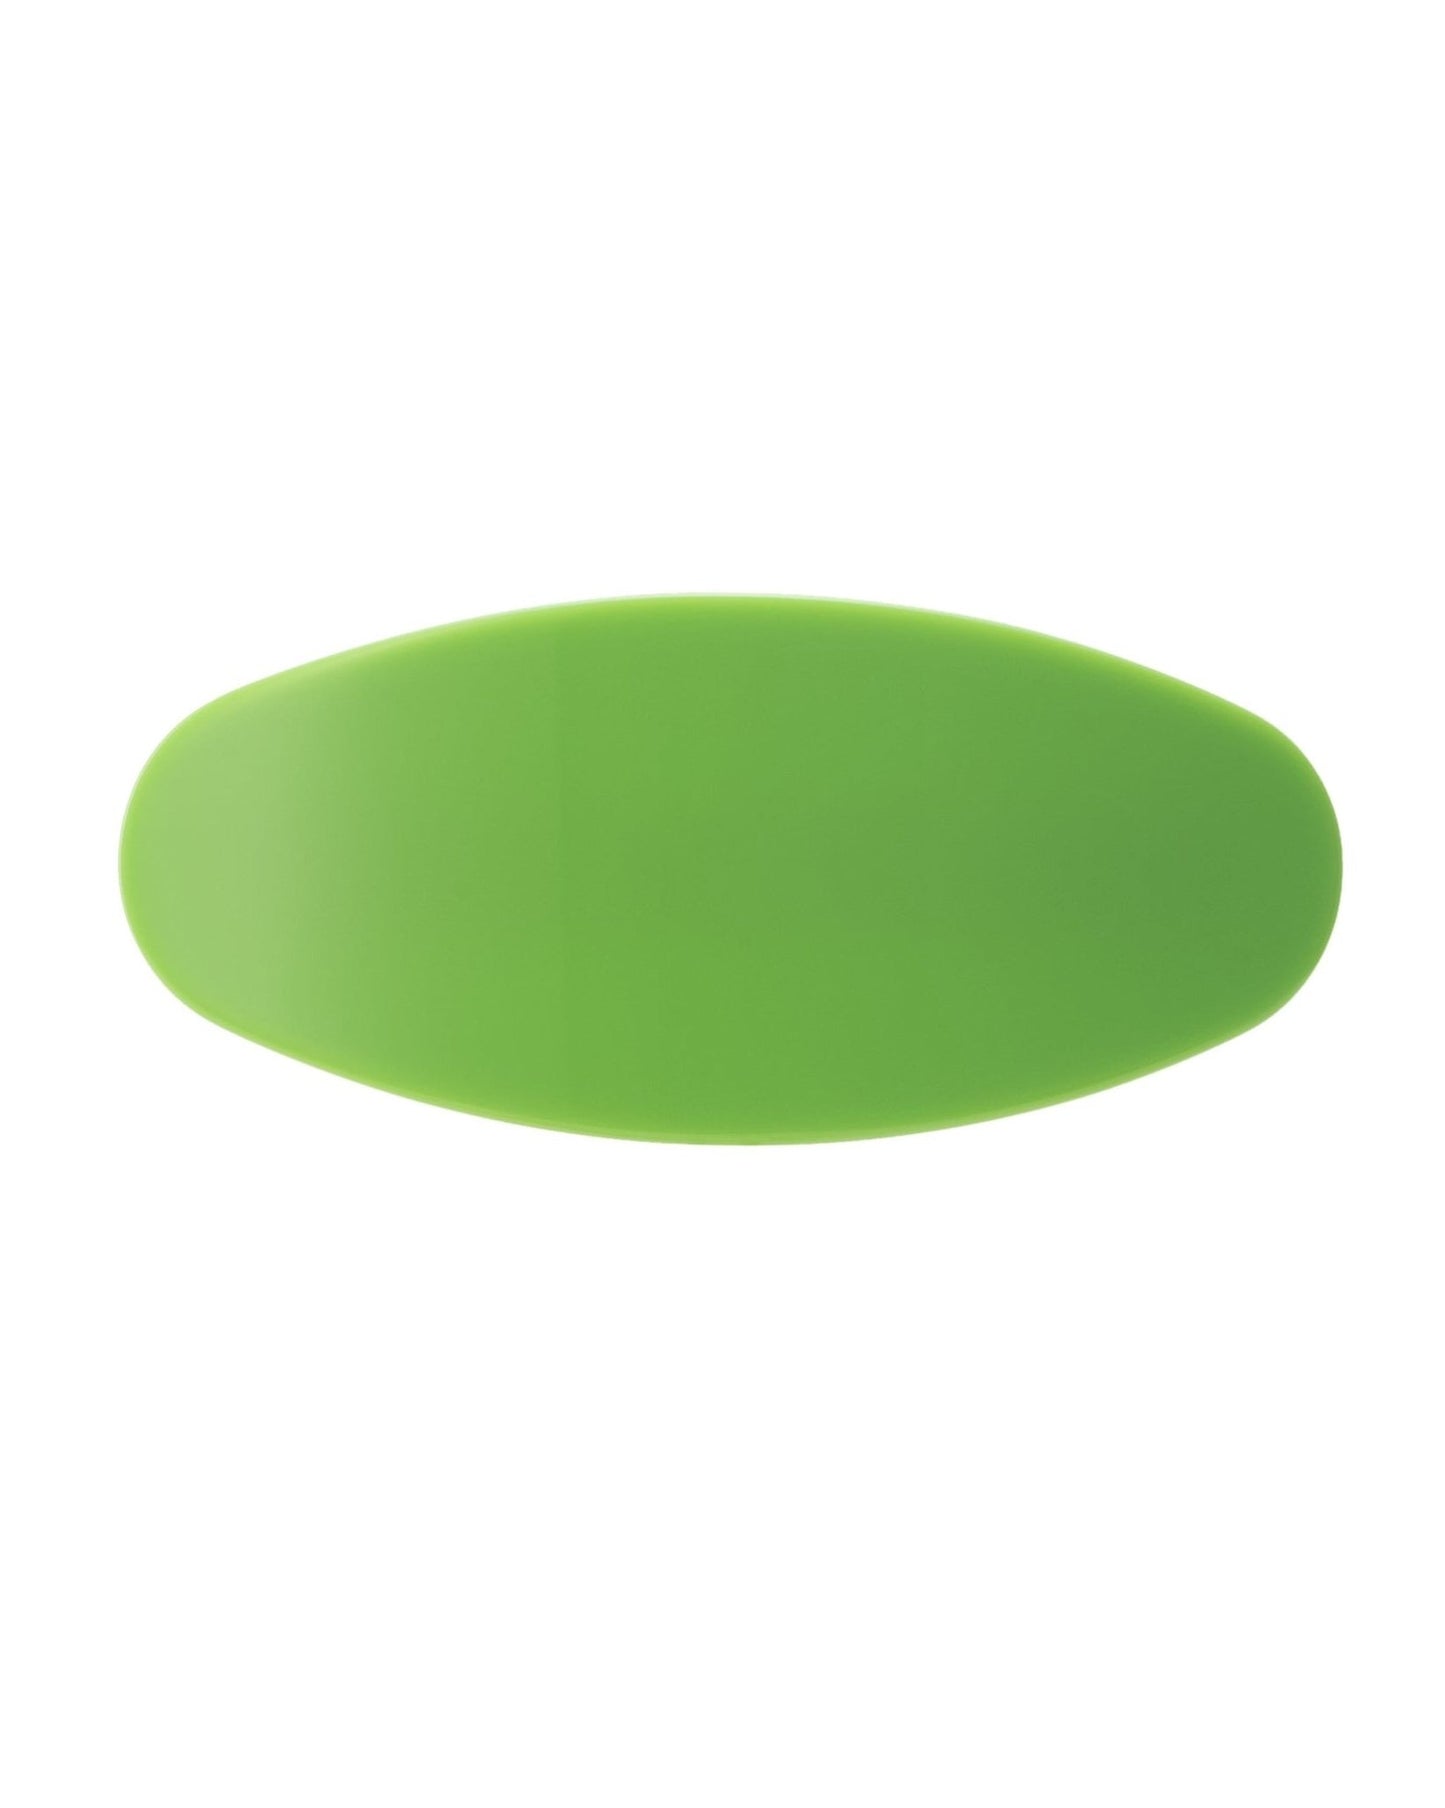 Jumbo Oval Clip in Neon Green - MACHETE